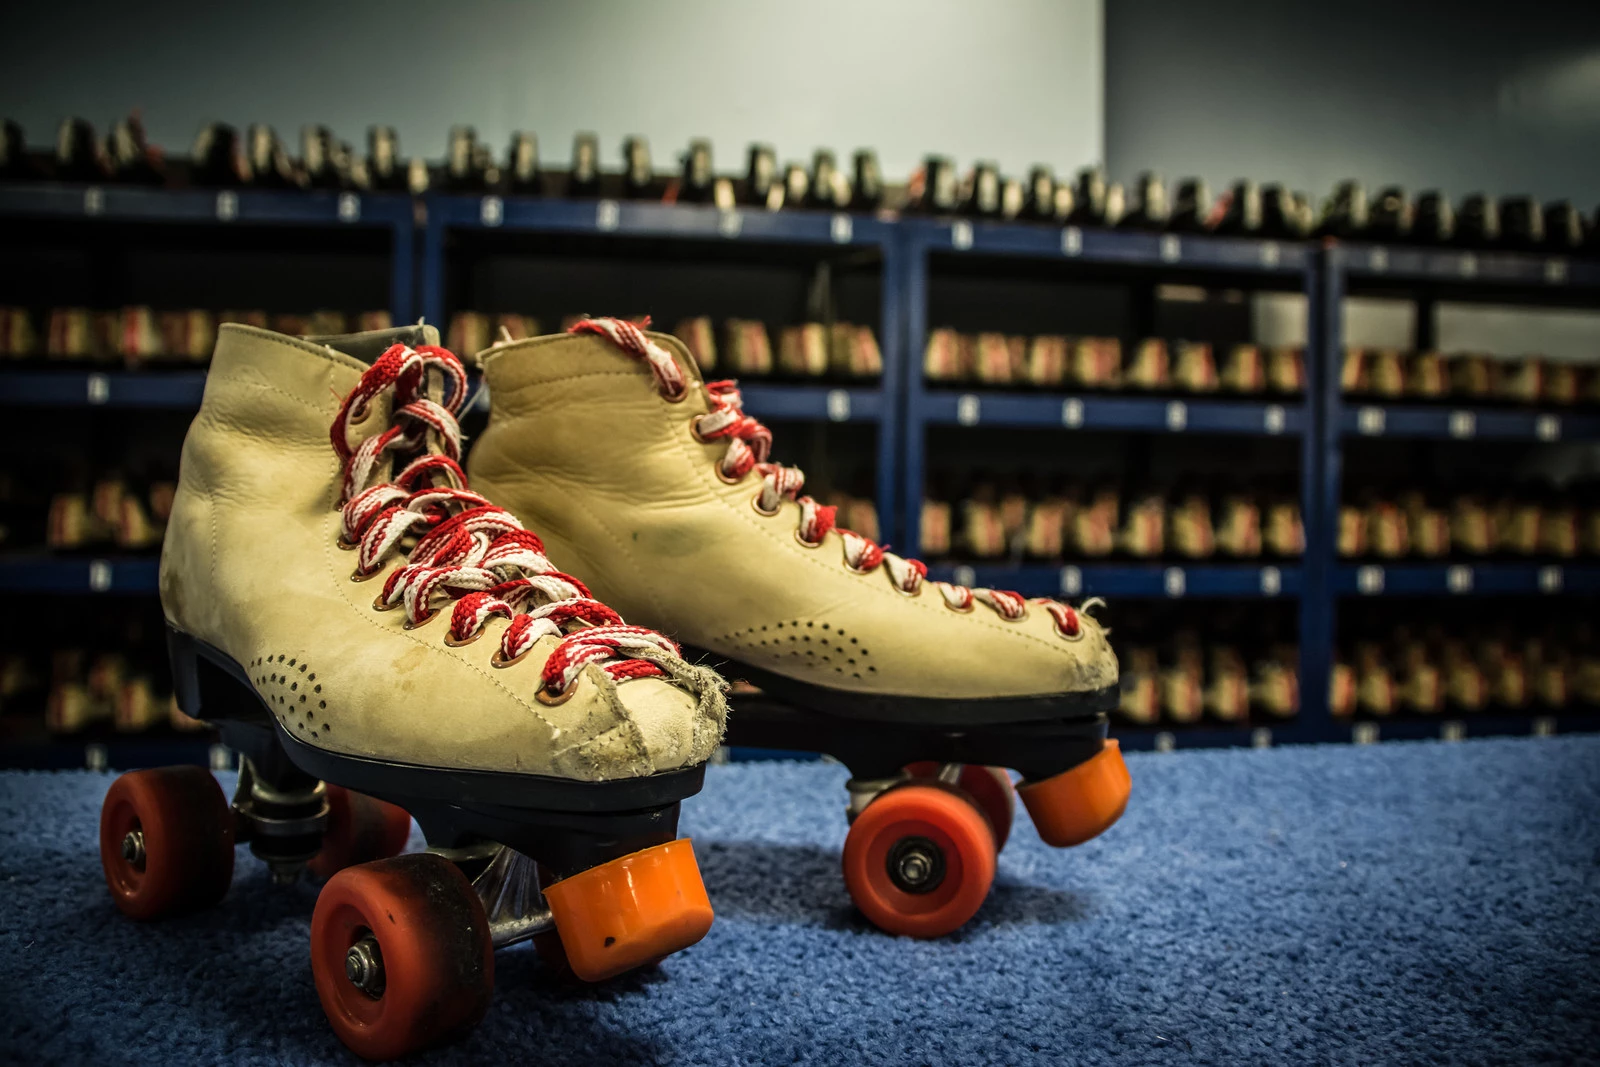 Roller Skate Rentals Becoming Reality In Bismarck.